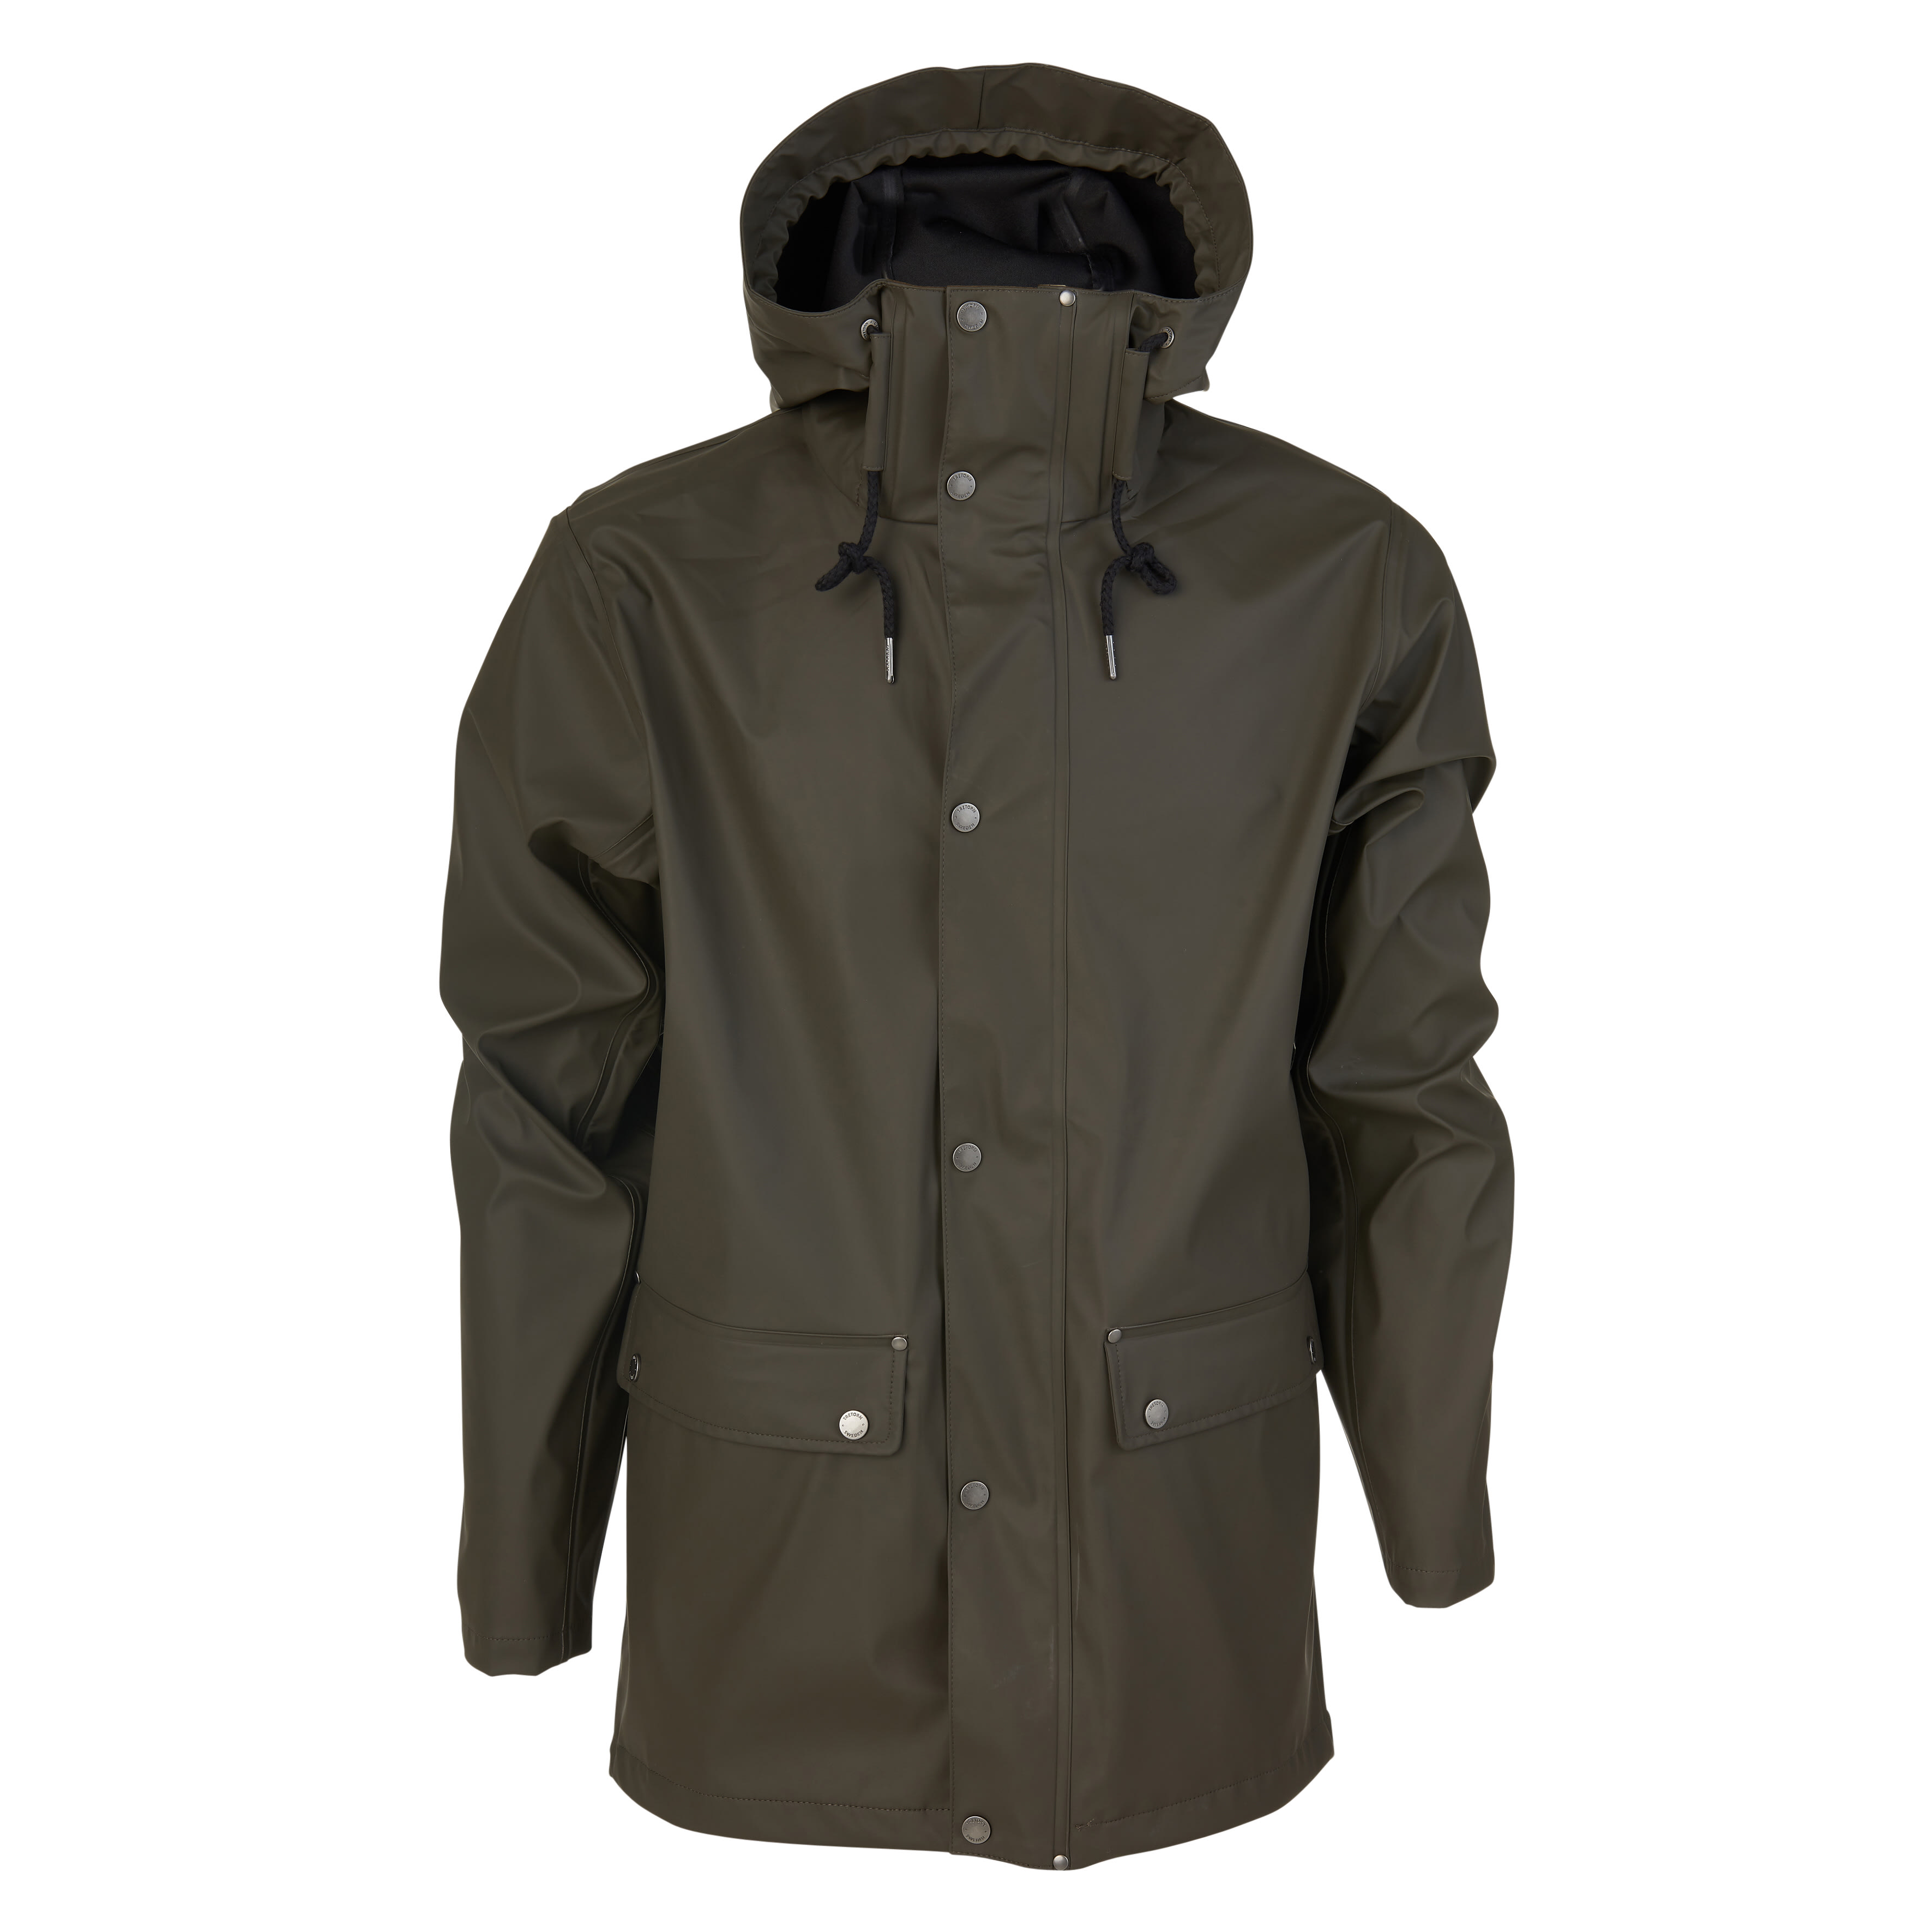 Buy Tretorn Men's Sixten 2.0 Rain Jacket from Outnorth